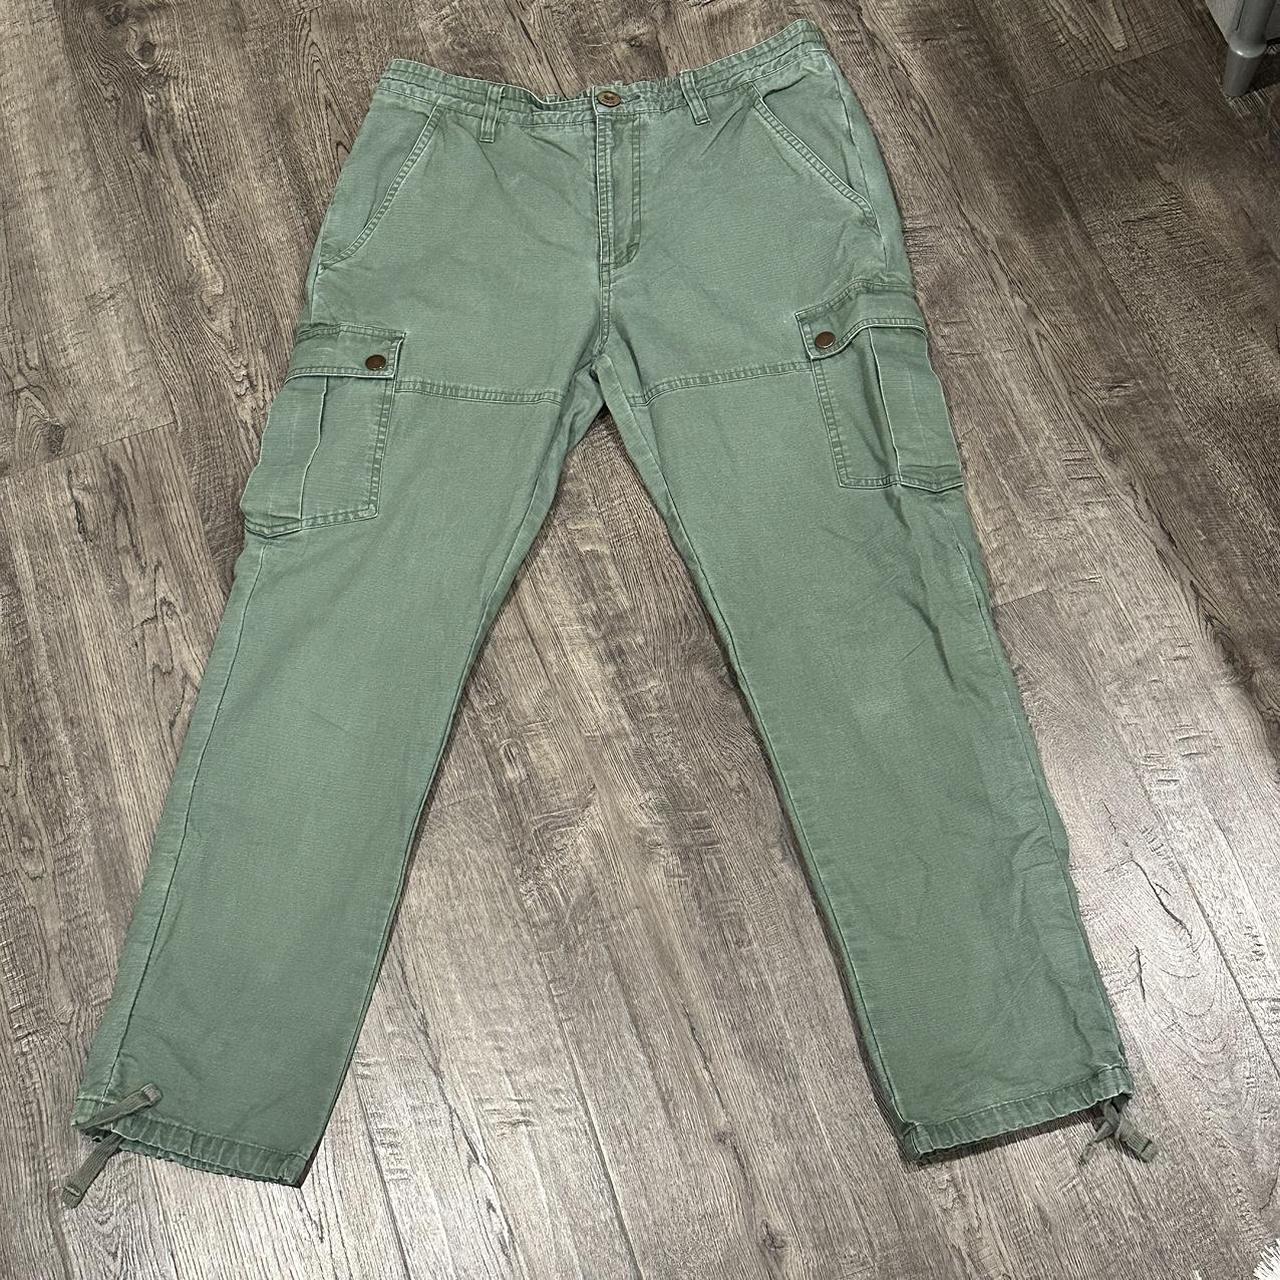 How to Rock Colorful Pants | Green pants men, Green chino pants, Dark green  pants